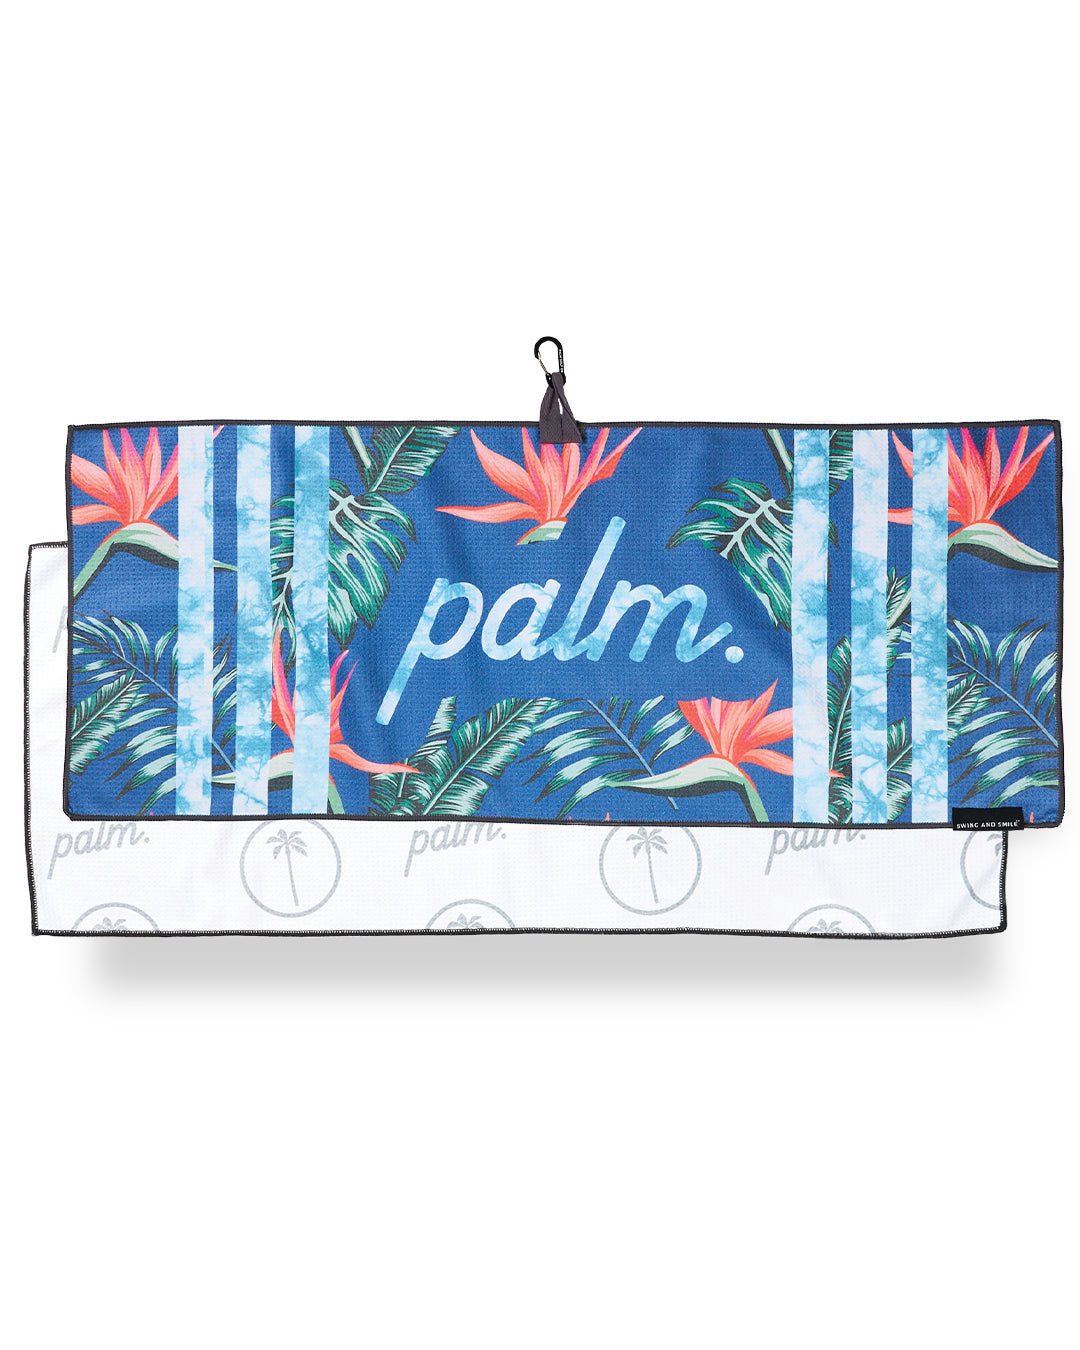 Shorebreak Towel - Palm Golf Co.